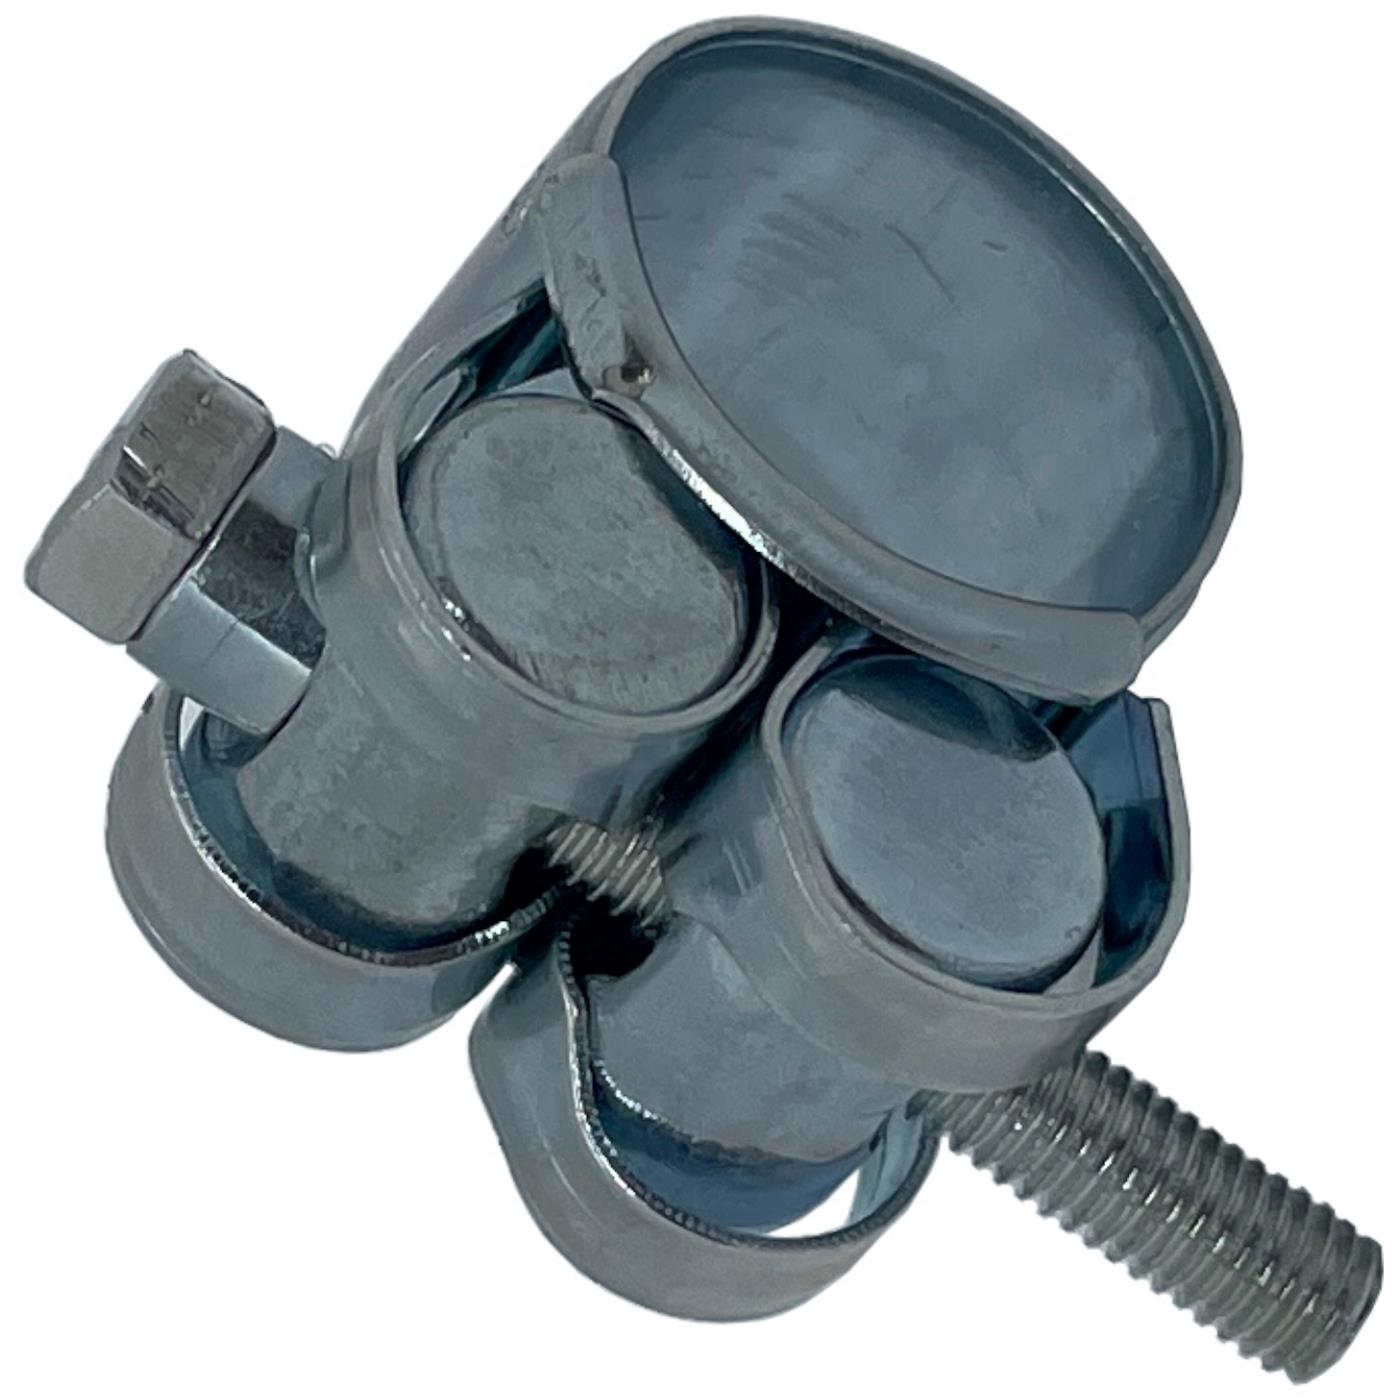 1x Lumonic Hinge pin clamp 23-25mm Galvanised Exhaust clamp for construction cars trucks